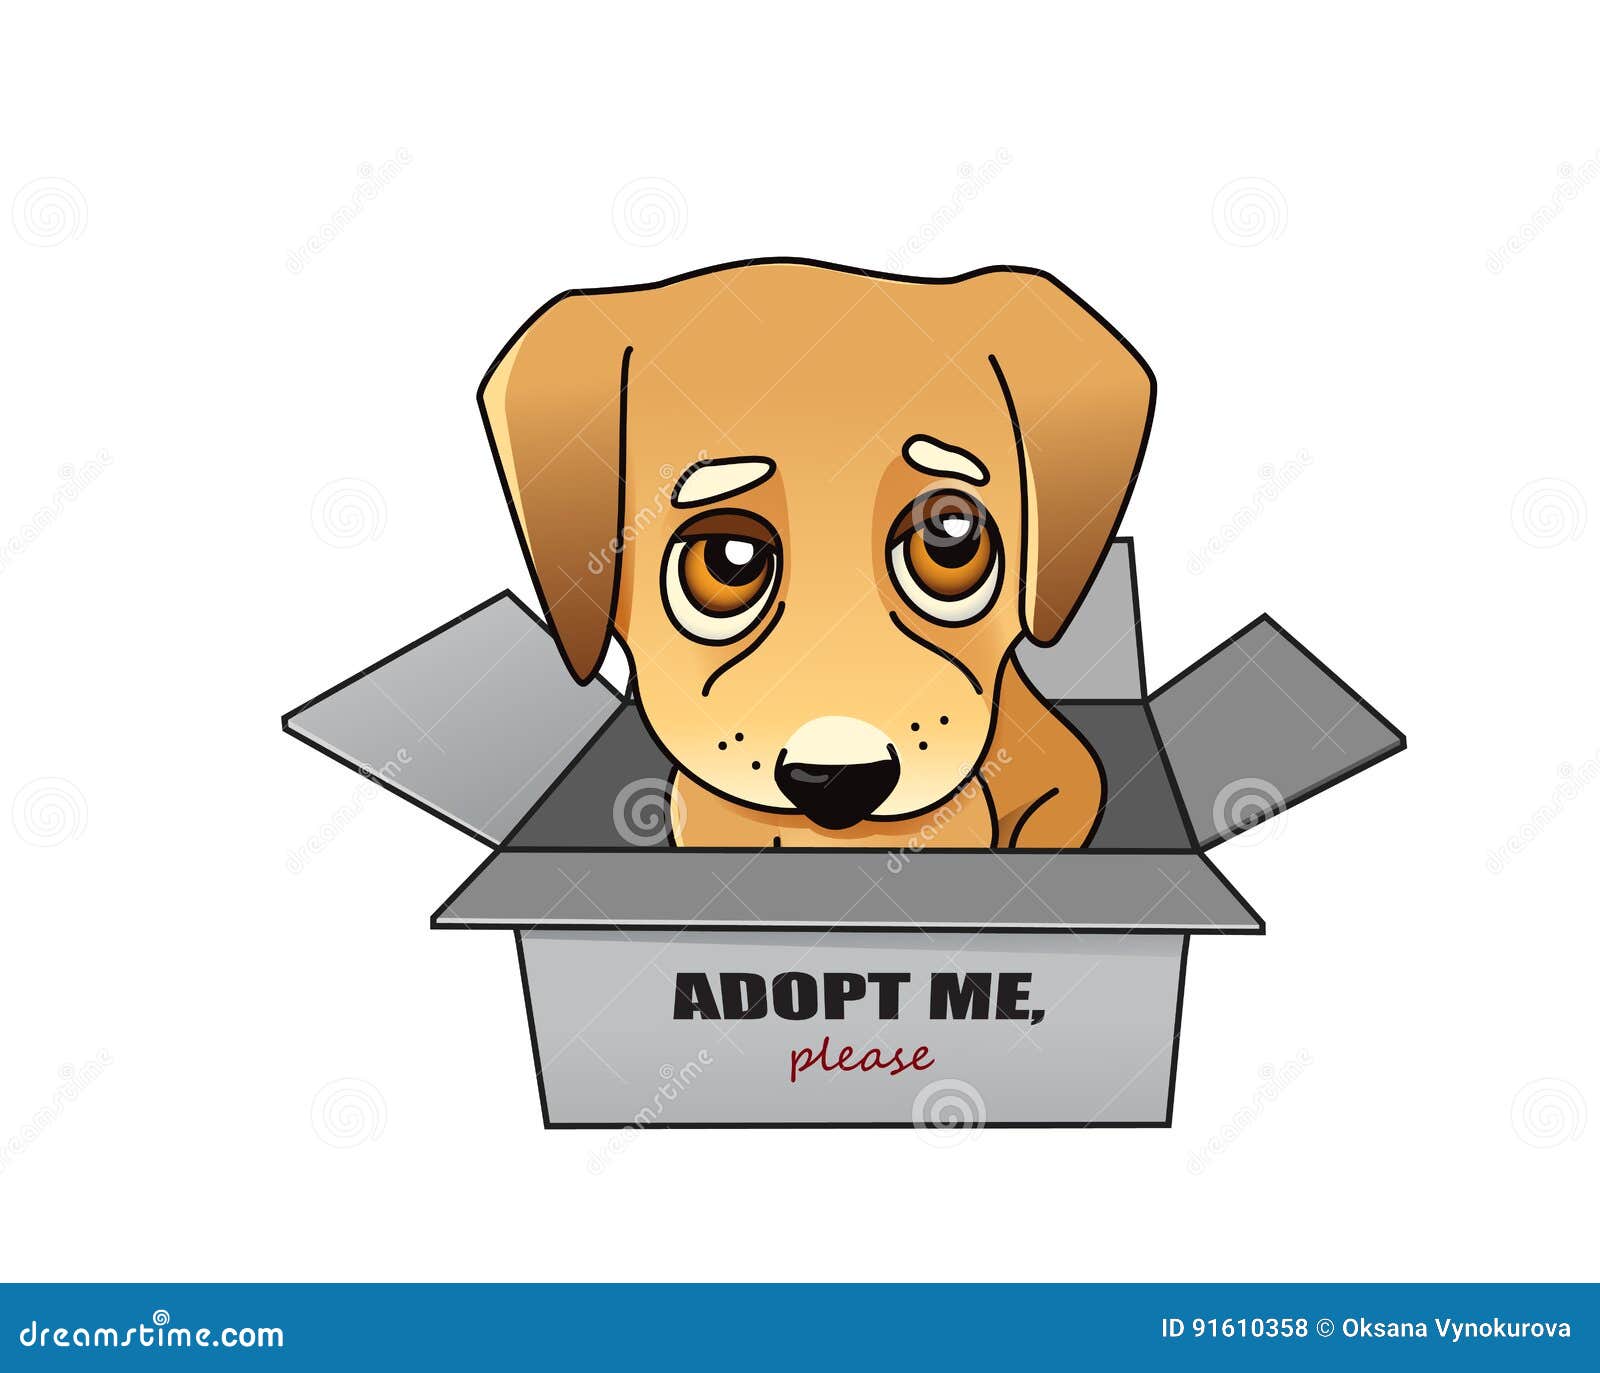 adopt me dog rescue